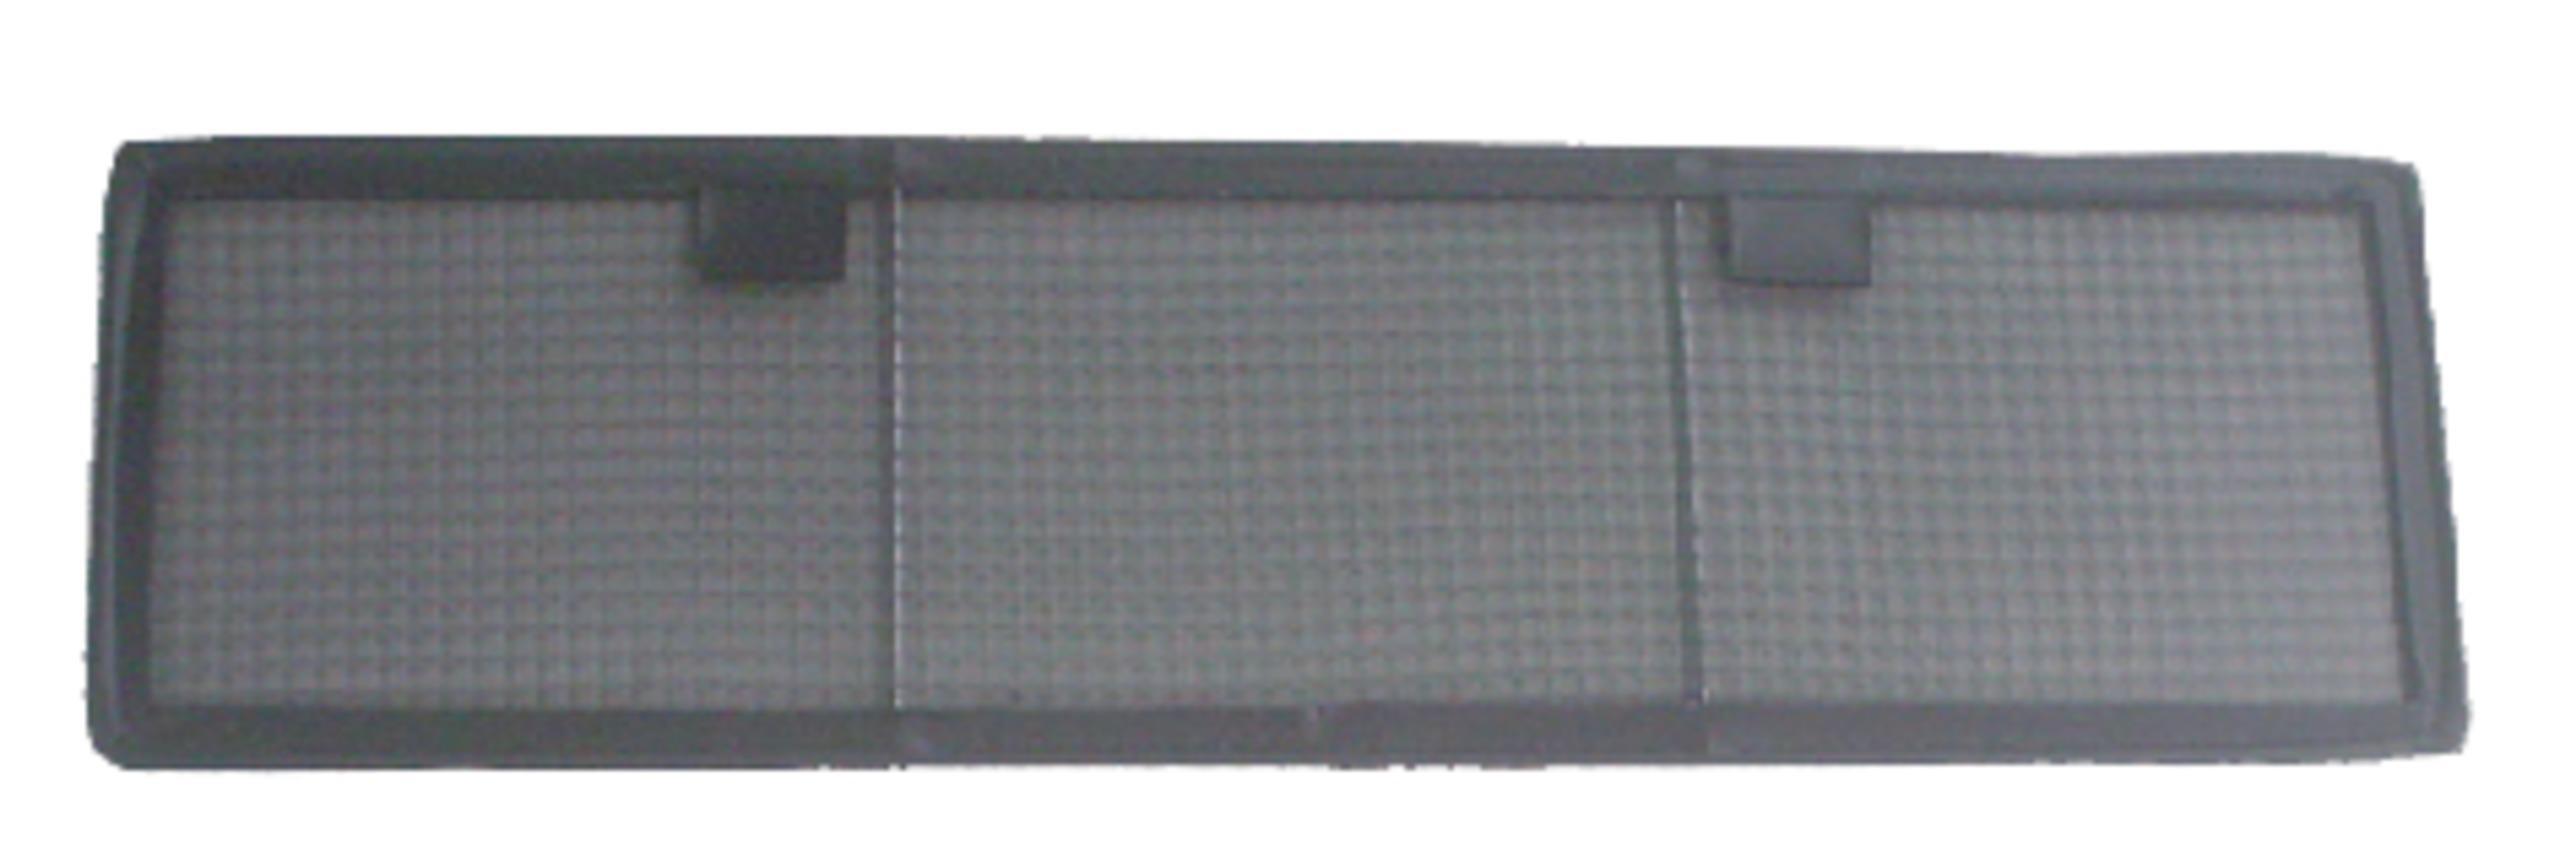 7090730 Filter uitwasbaar UM-FL1EF t.b.v. FDUM50VF FDUM22/28/36/45/56KXE6F in aluminium frame